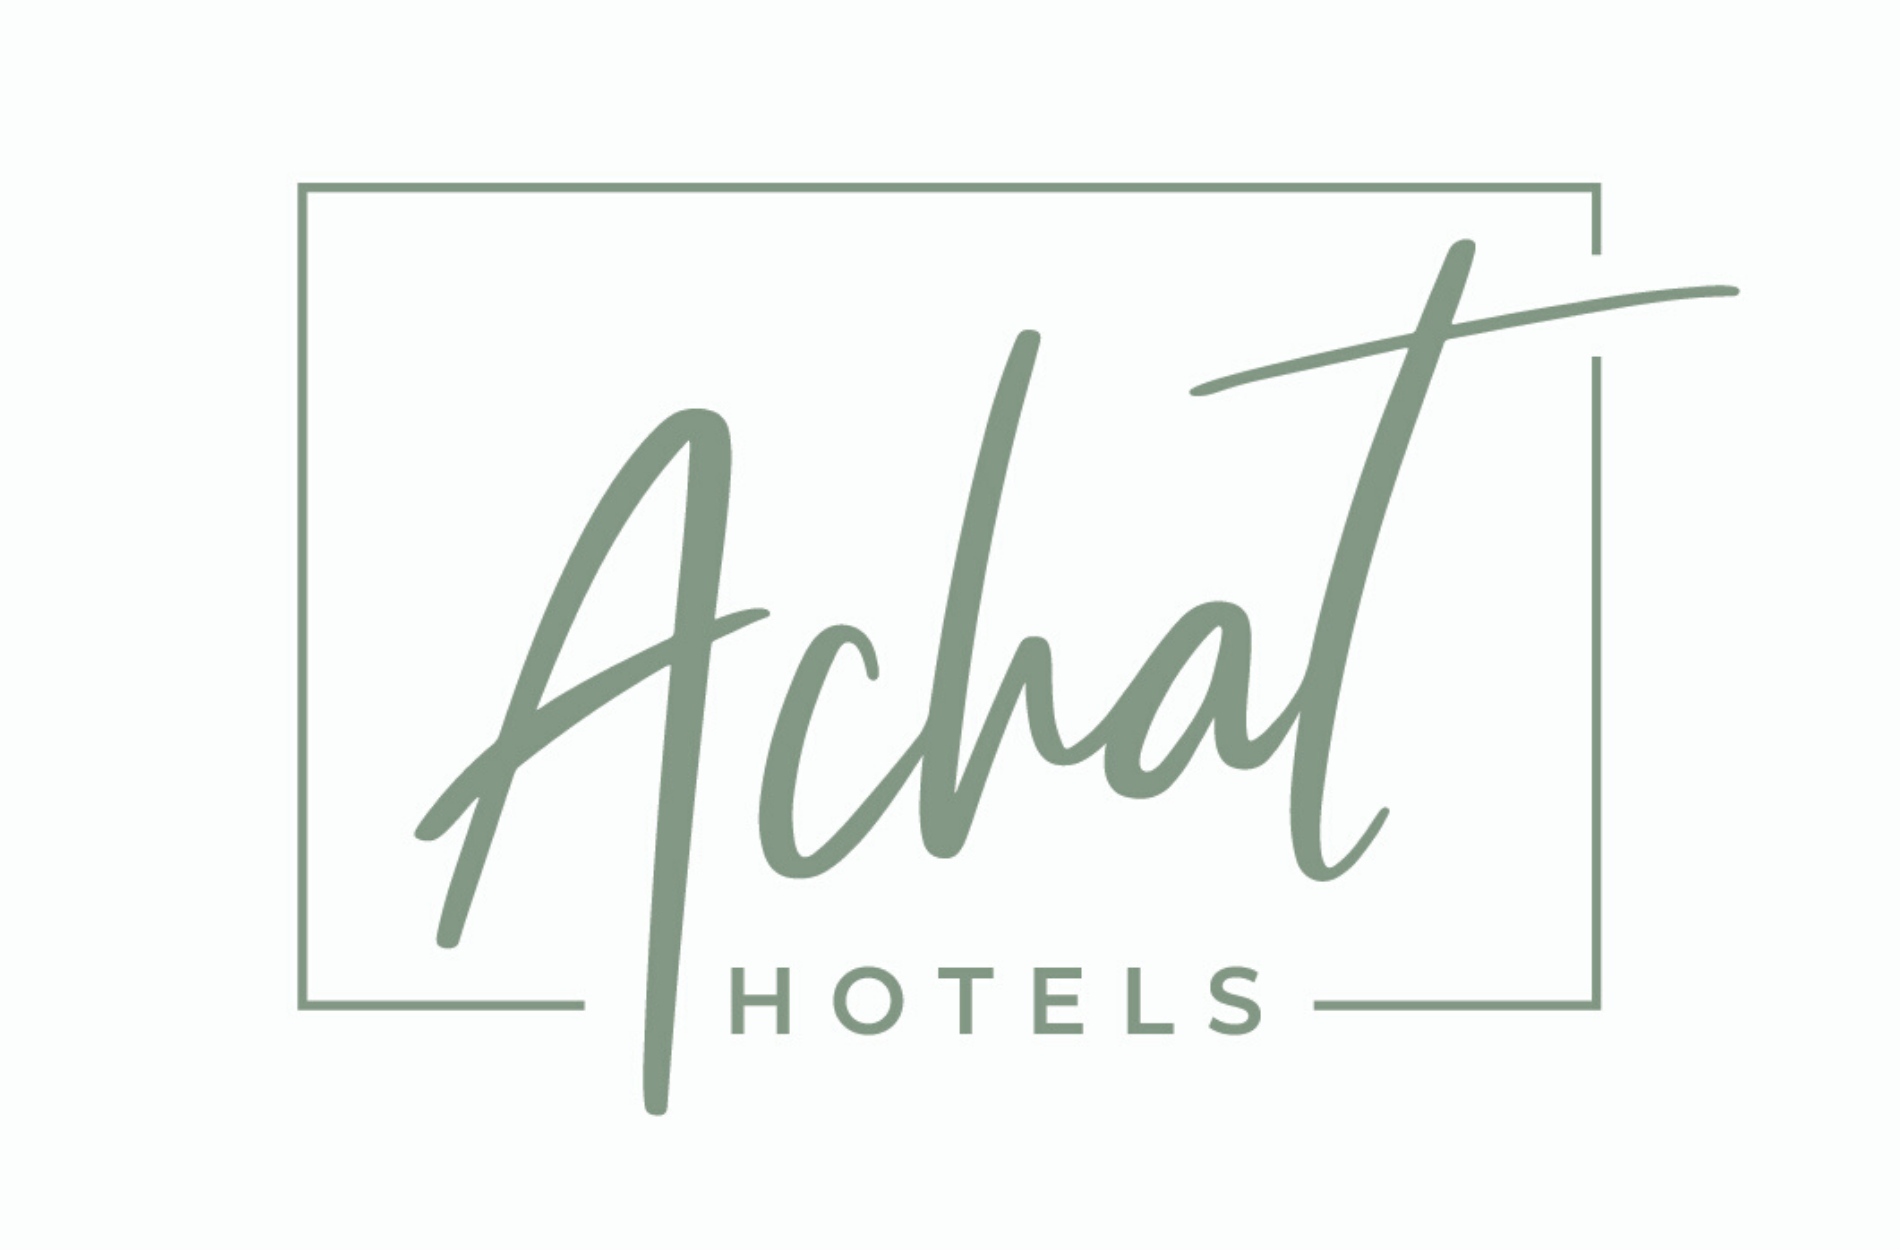 Achat Hotels Logo